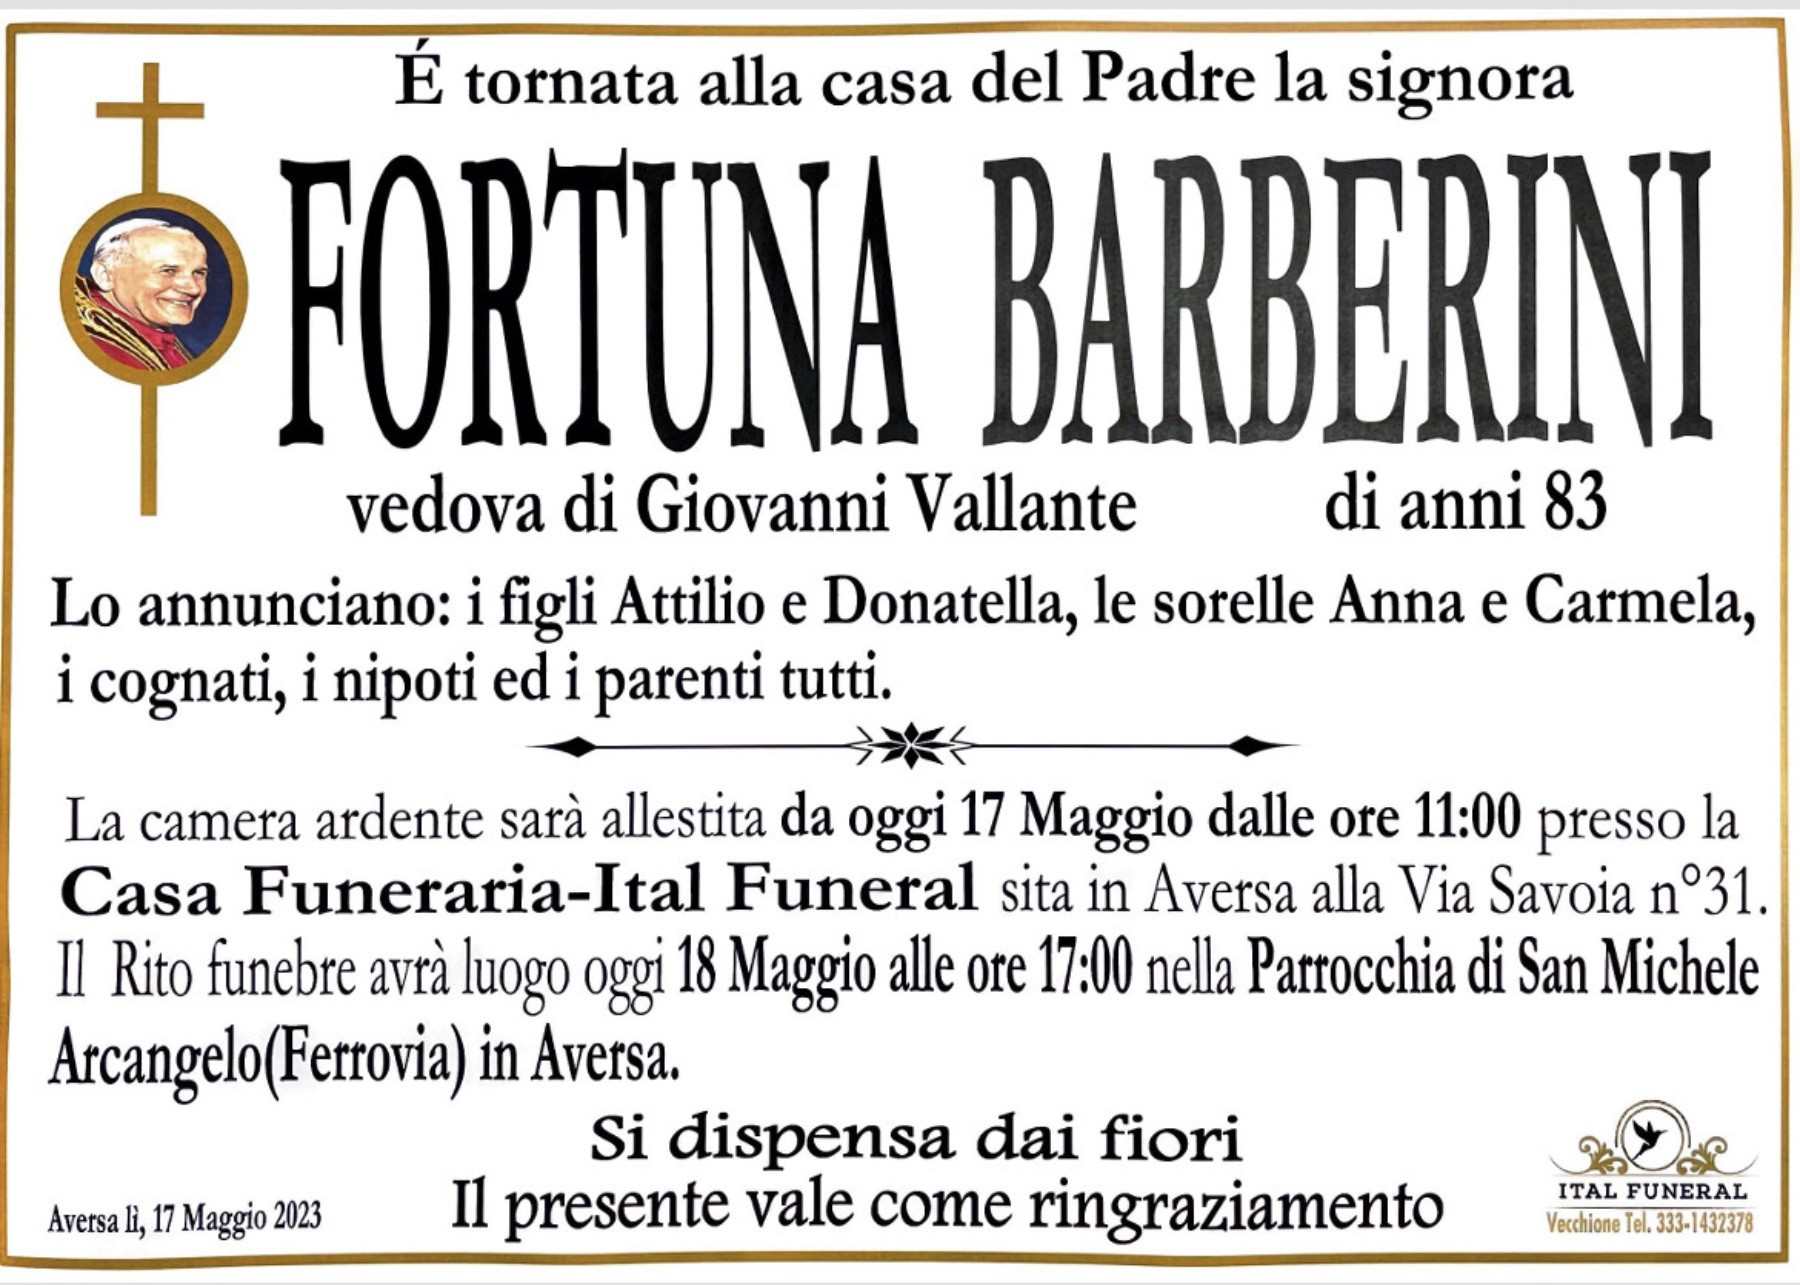 Fortuna Barberini